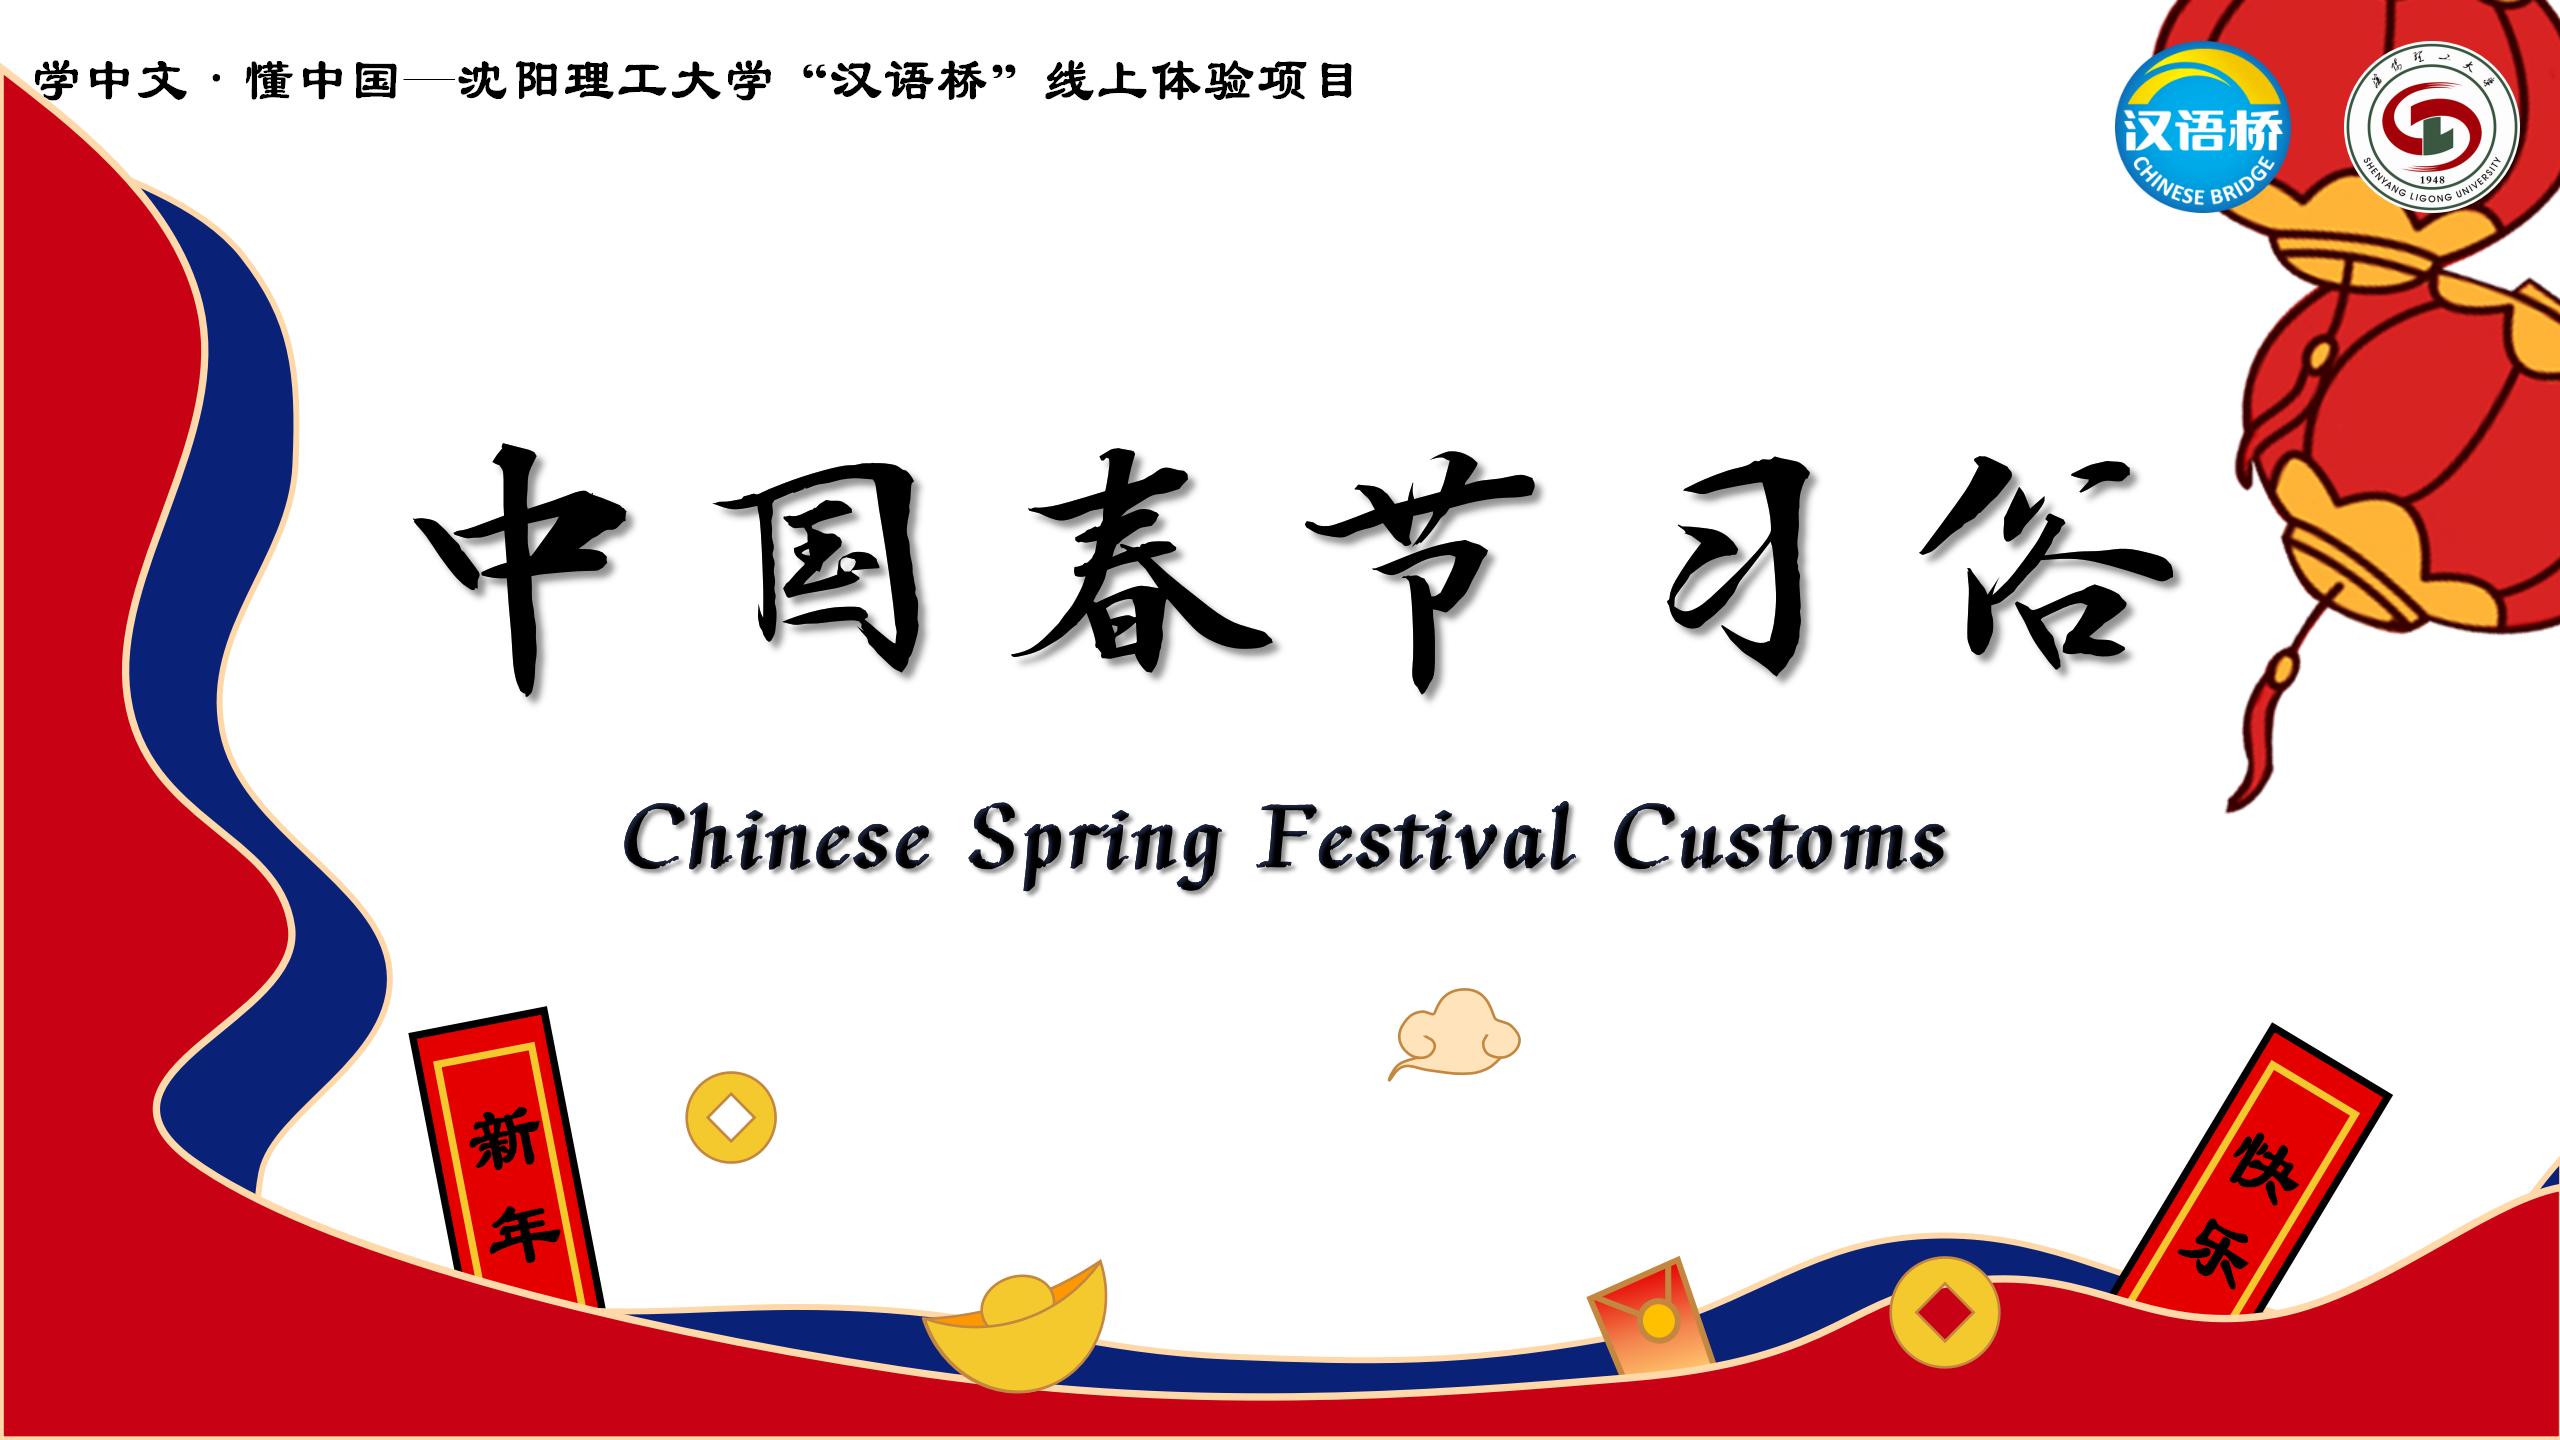 Chinese Spring Festival Customs